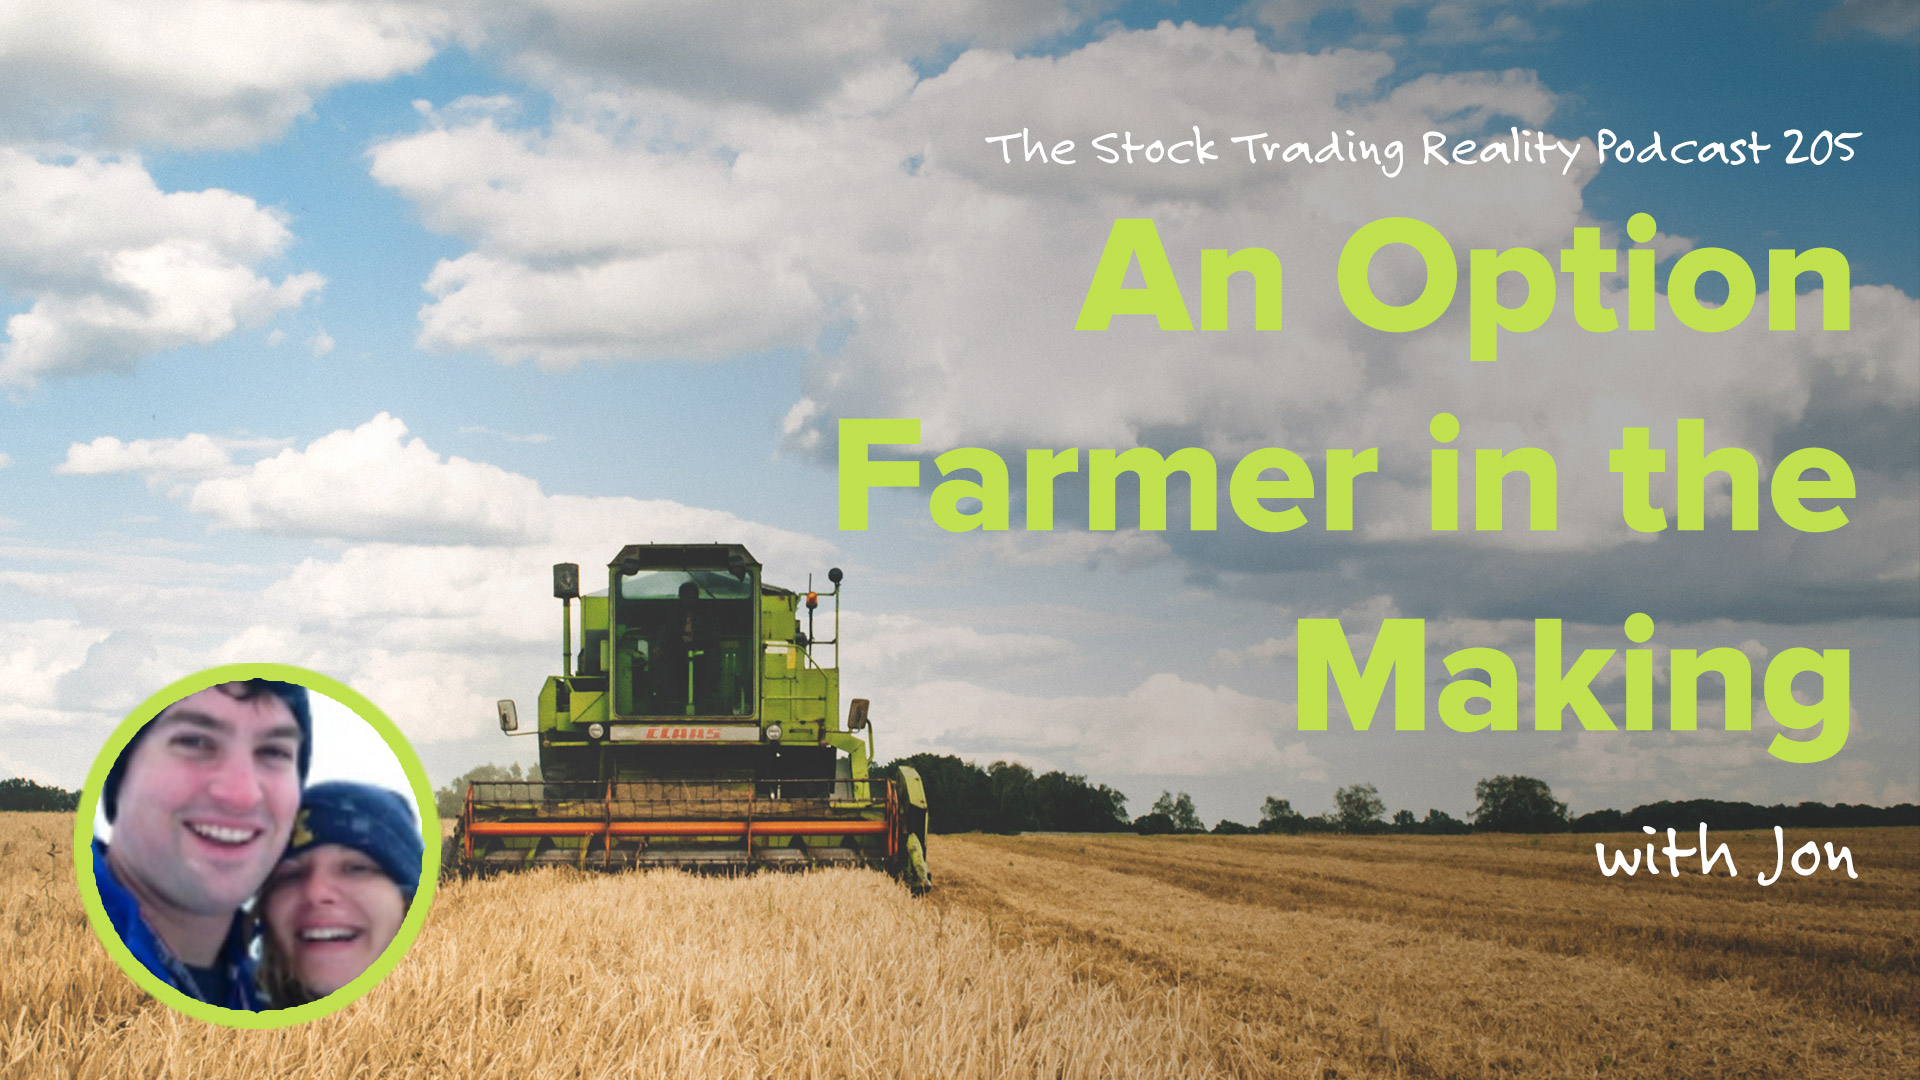 STR 205: An Option Farmer in the Making